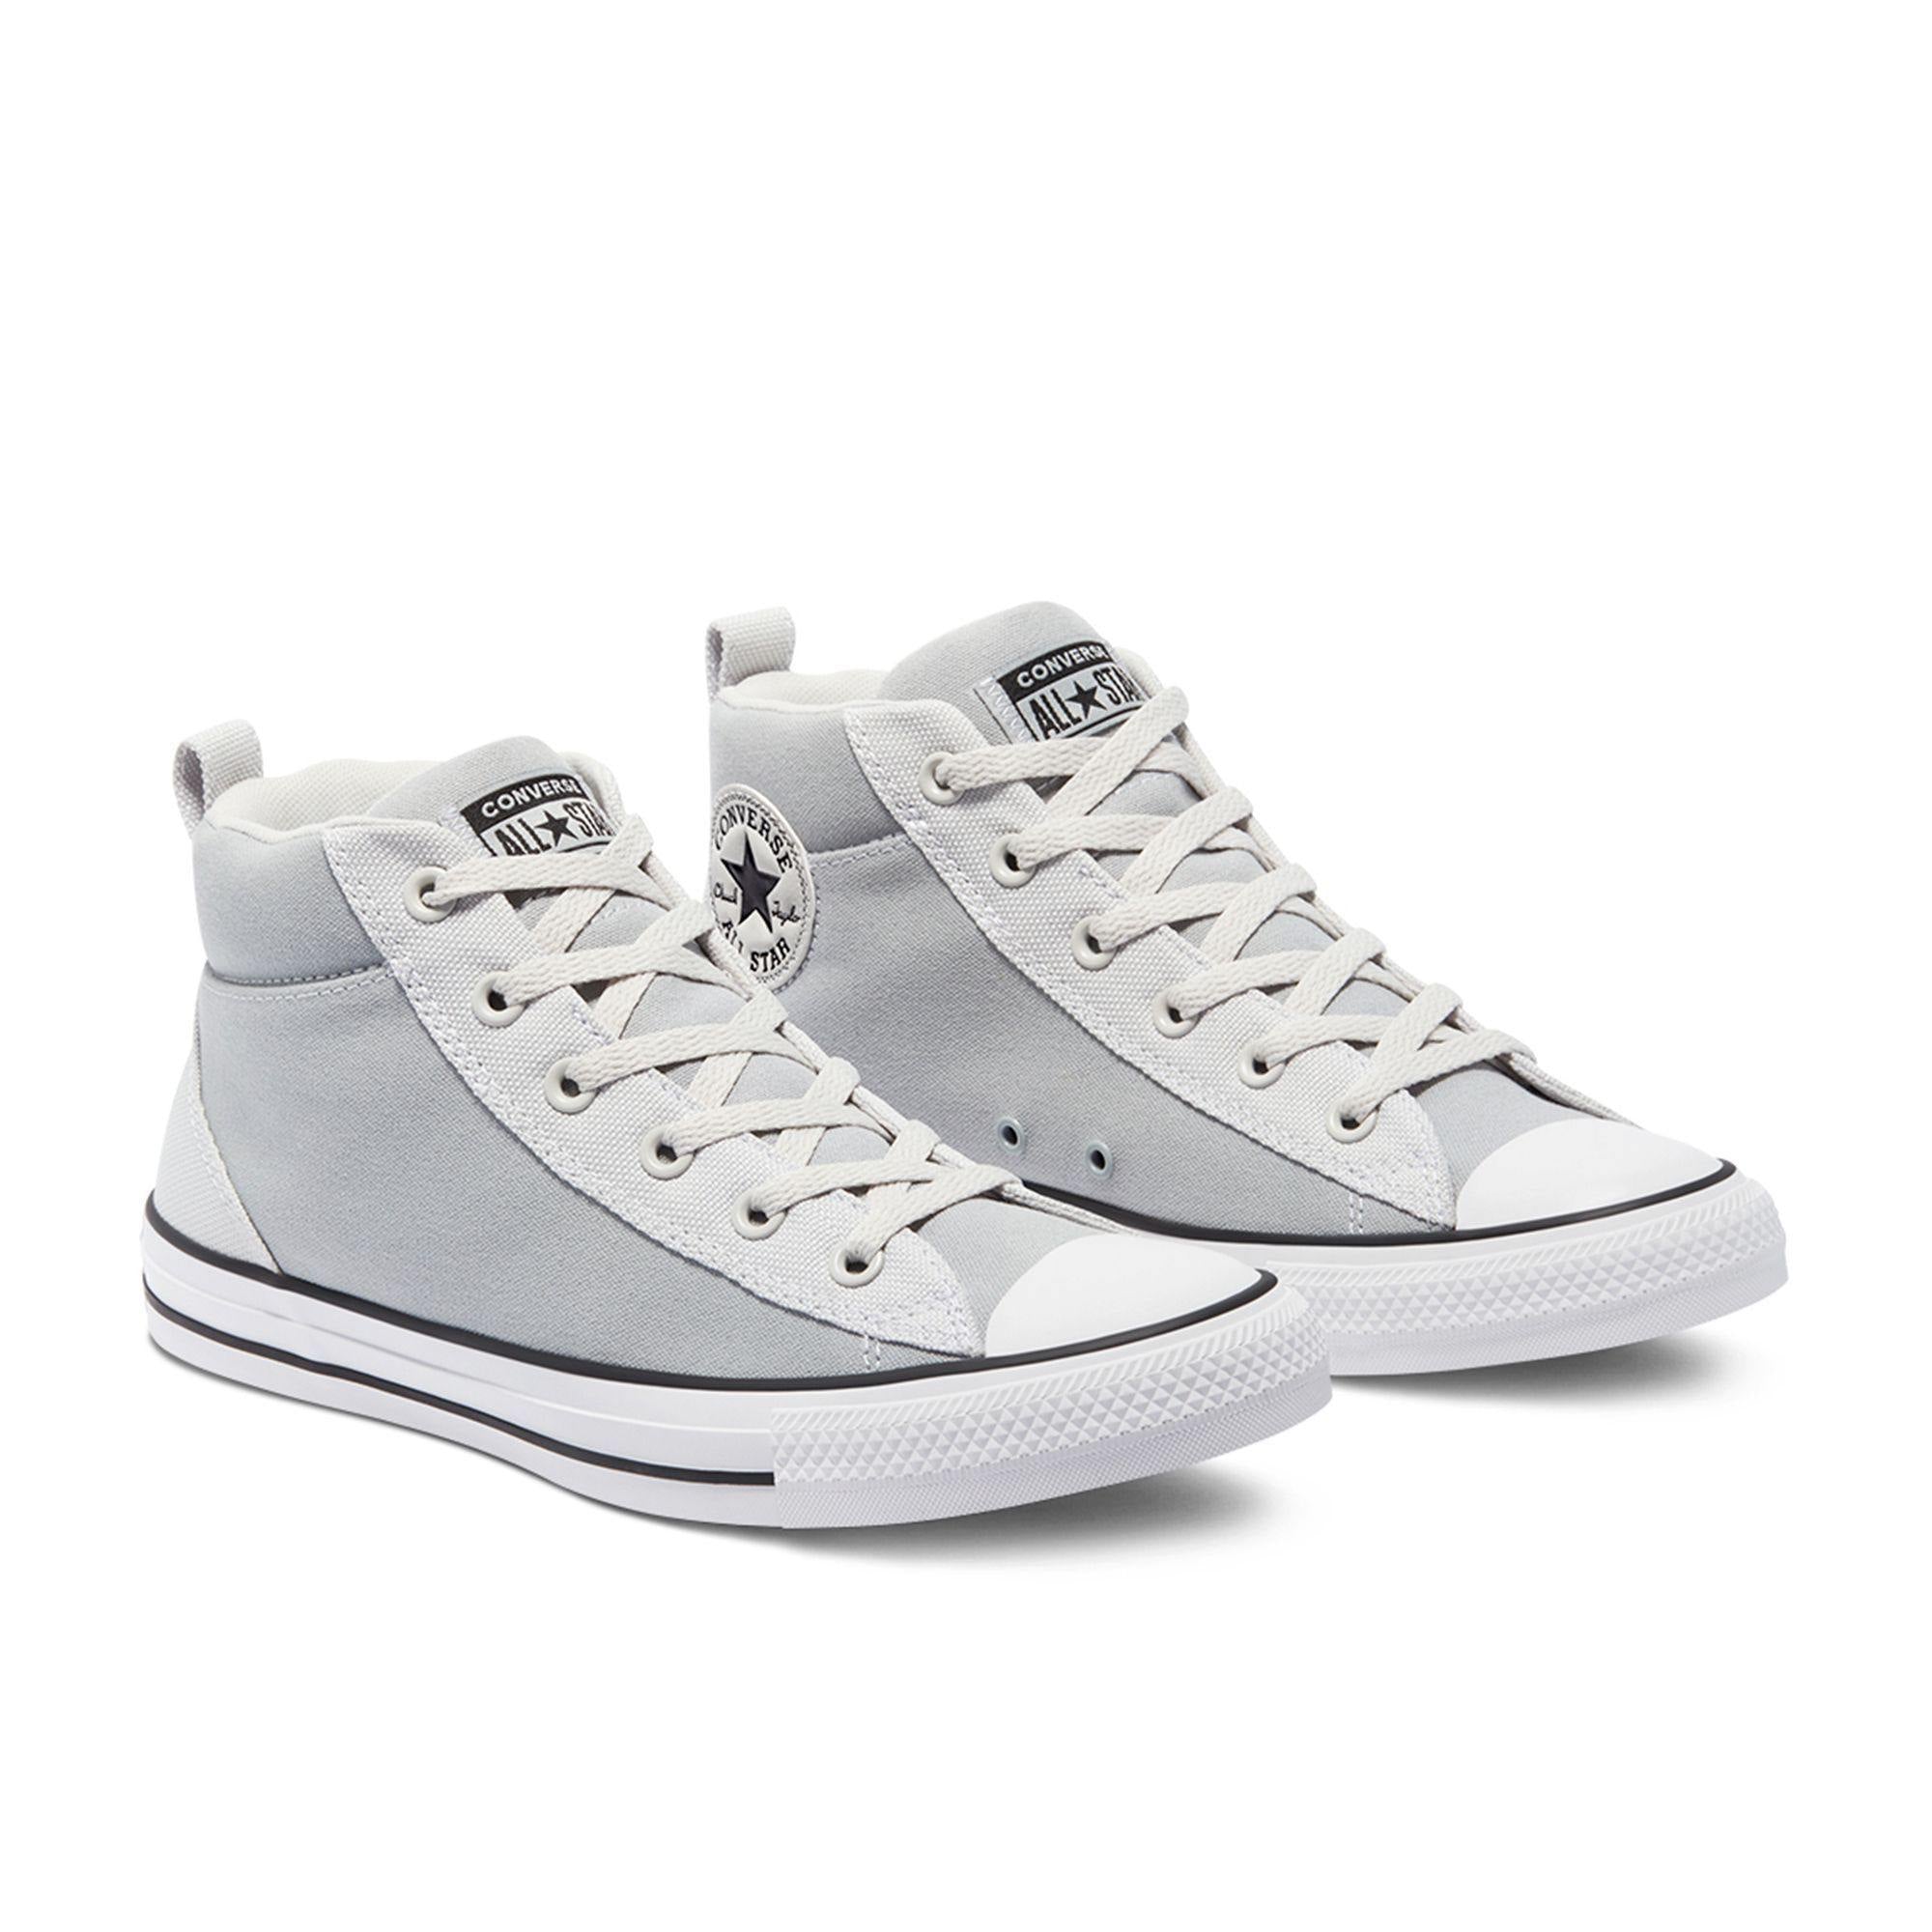 CT-J34 (Ct street mid mouse/ash stone/white) 52195250 - Otahuhu Shoes